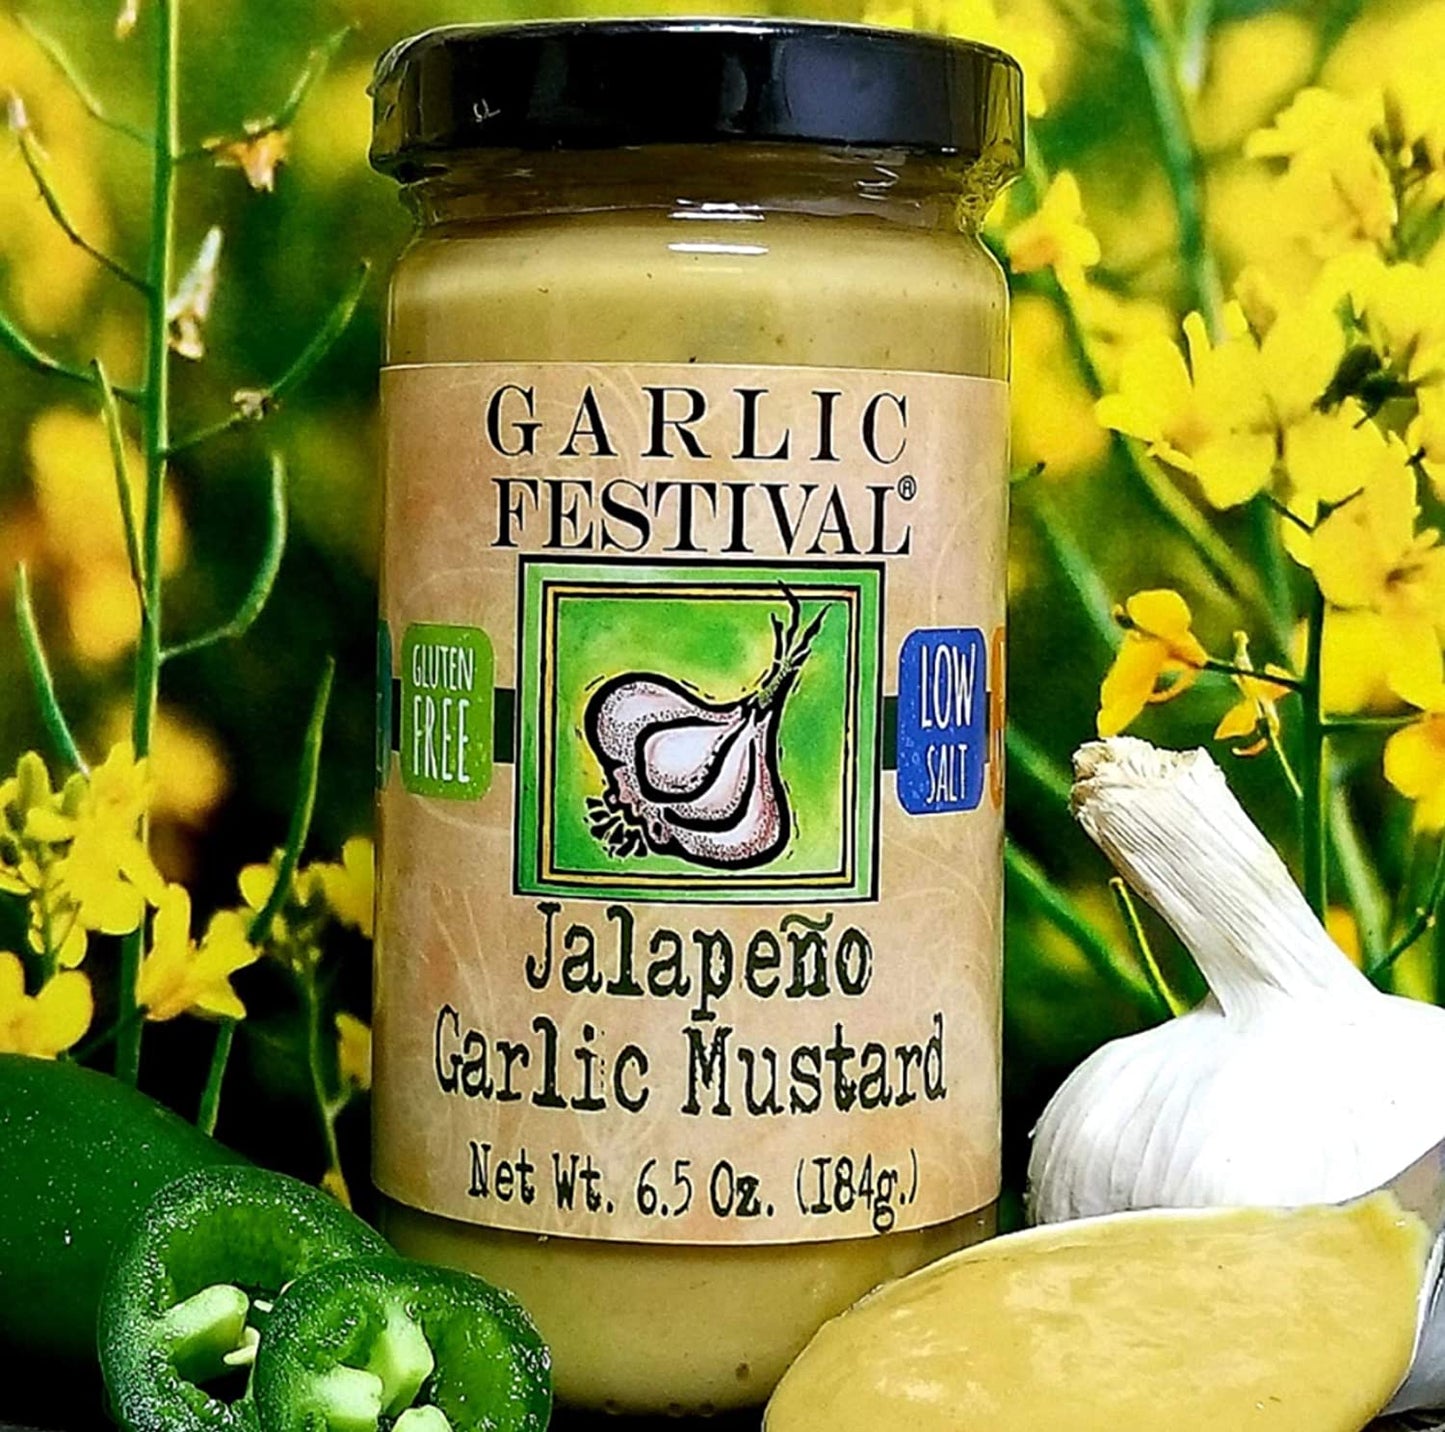 Jalapeno Garlic Mustard Garlic Festival Foods 7 oz $6.98